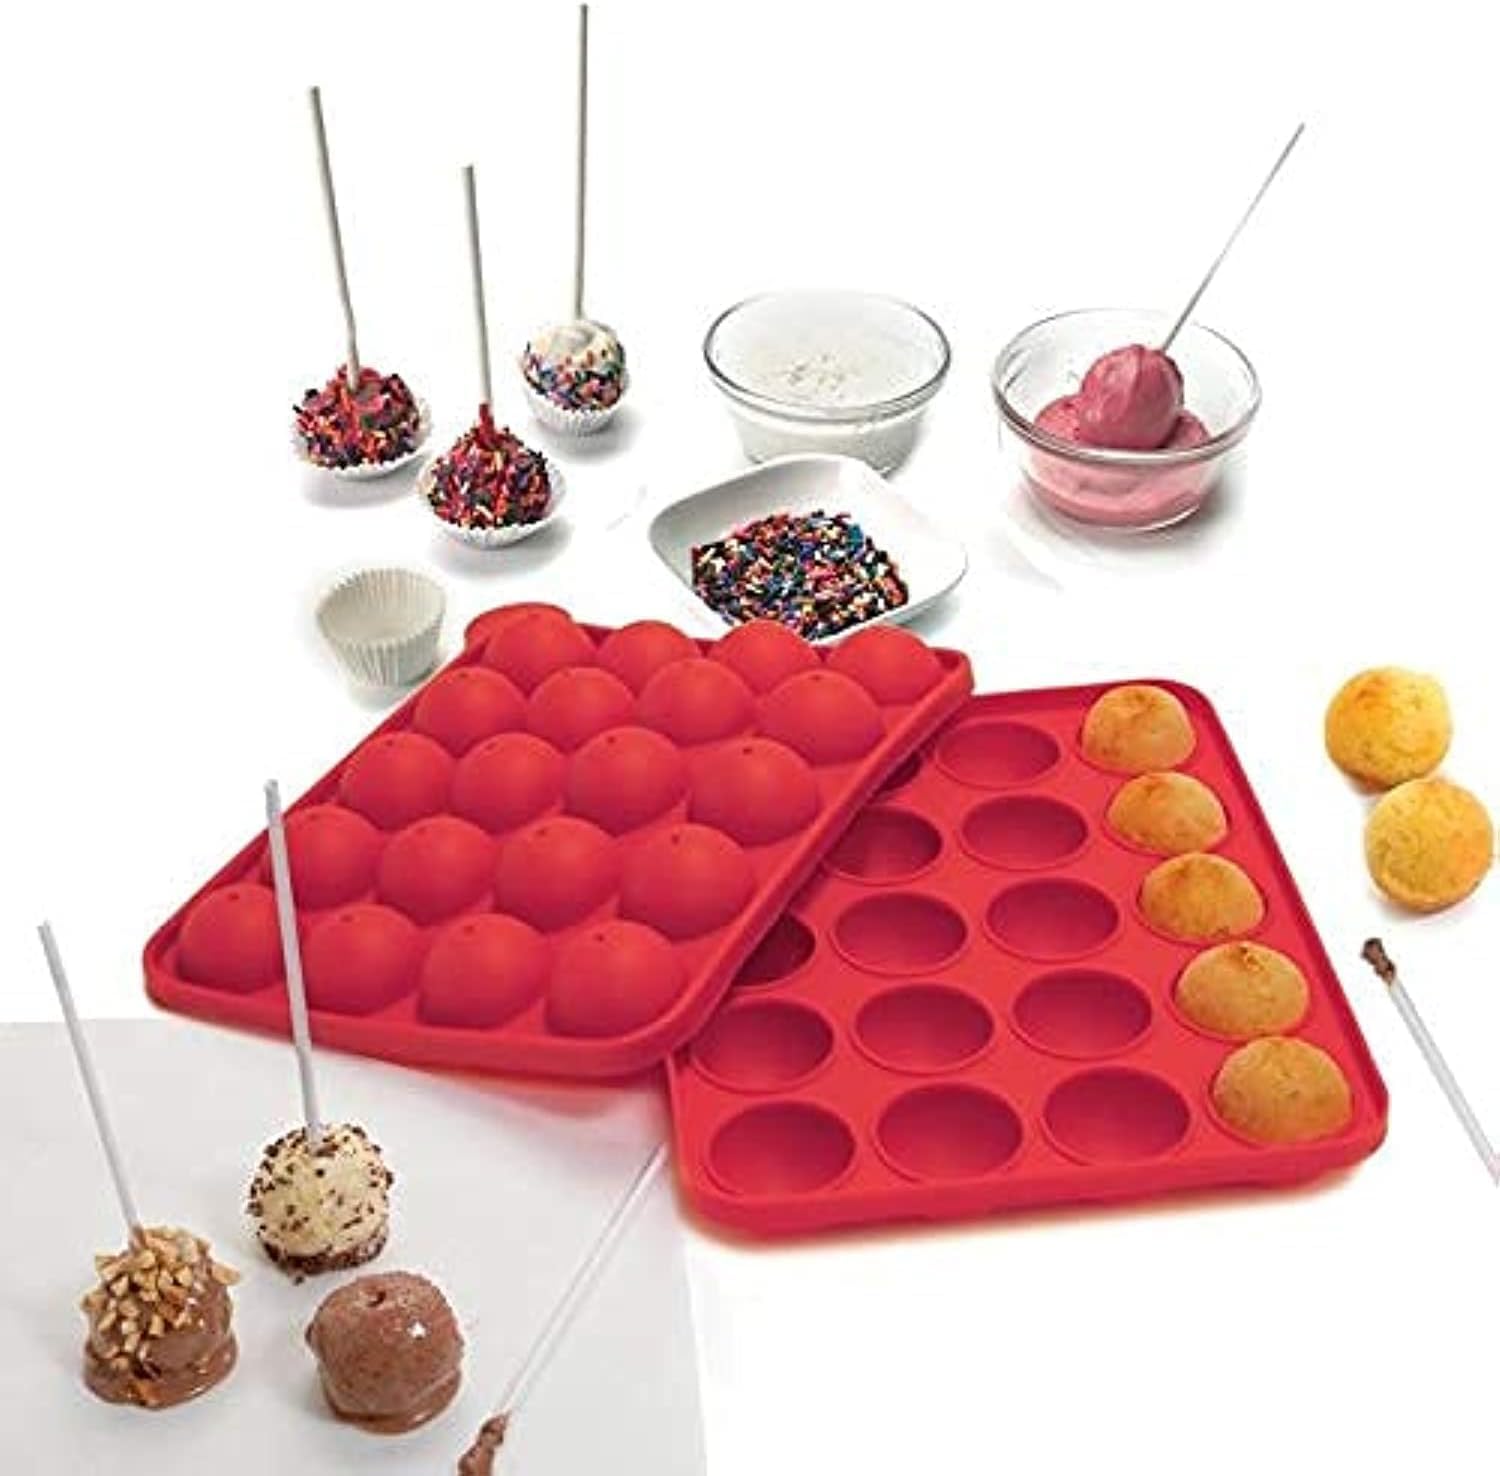 Atraux 1 Pcs 20 Cavity Silicone Lolly Pop Baking Mold, Non Stick Cake Pop Mold Tray (Random Colors)